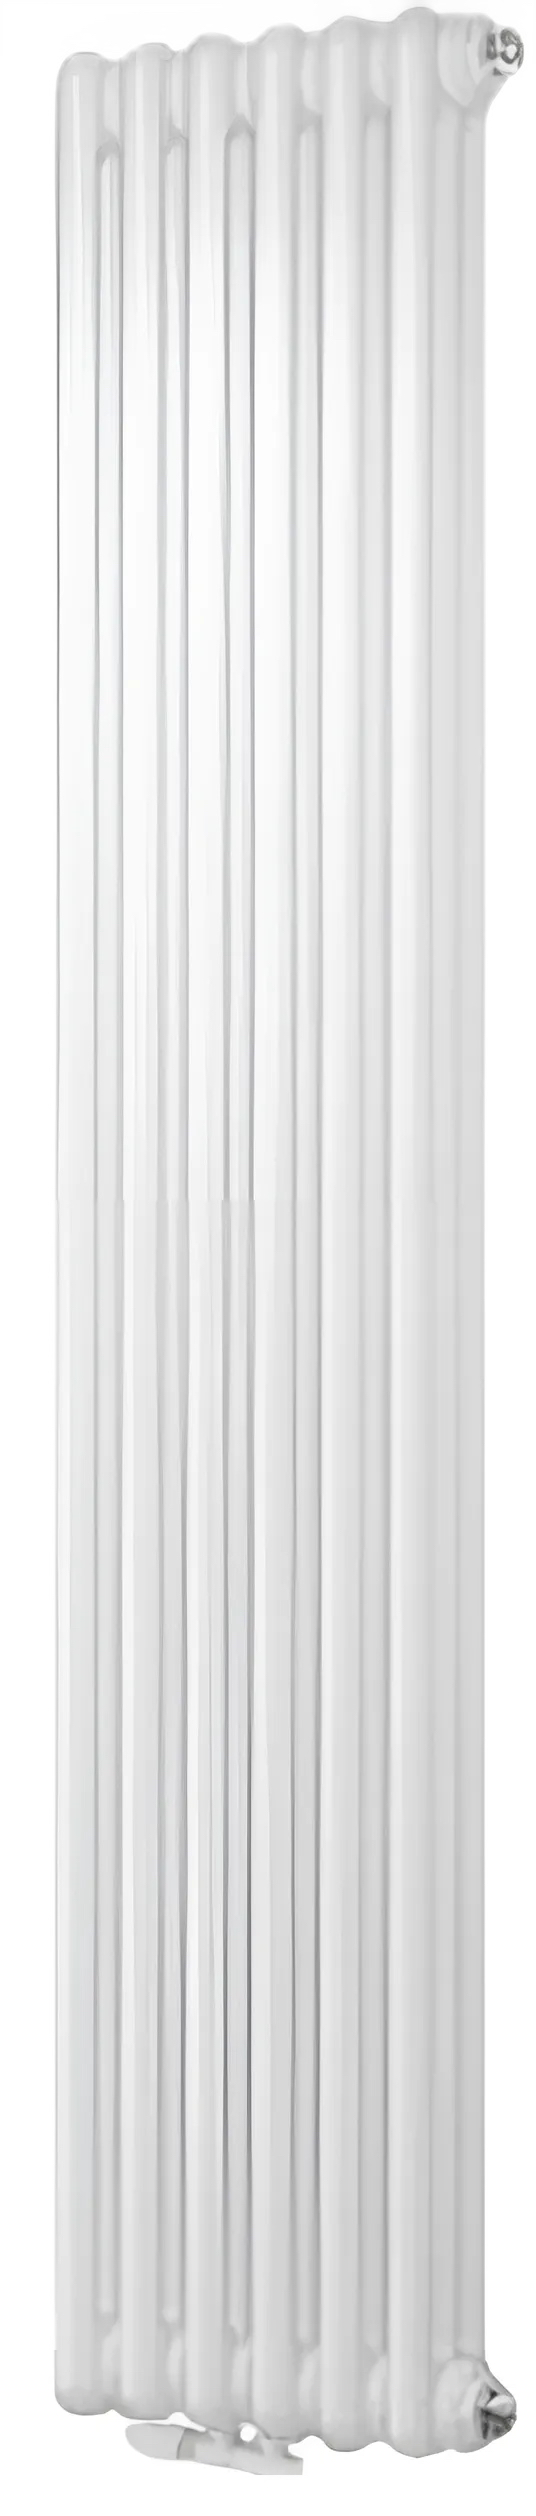 Характеристики дизайн-радиатор Cordivari Ardesia 2 колонны 6 секций H1800 мм AS6 COLOR RAL9016